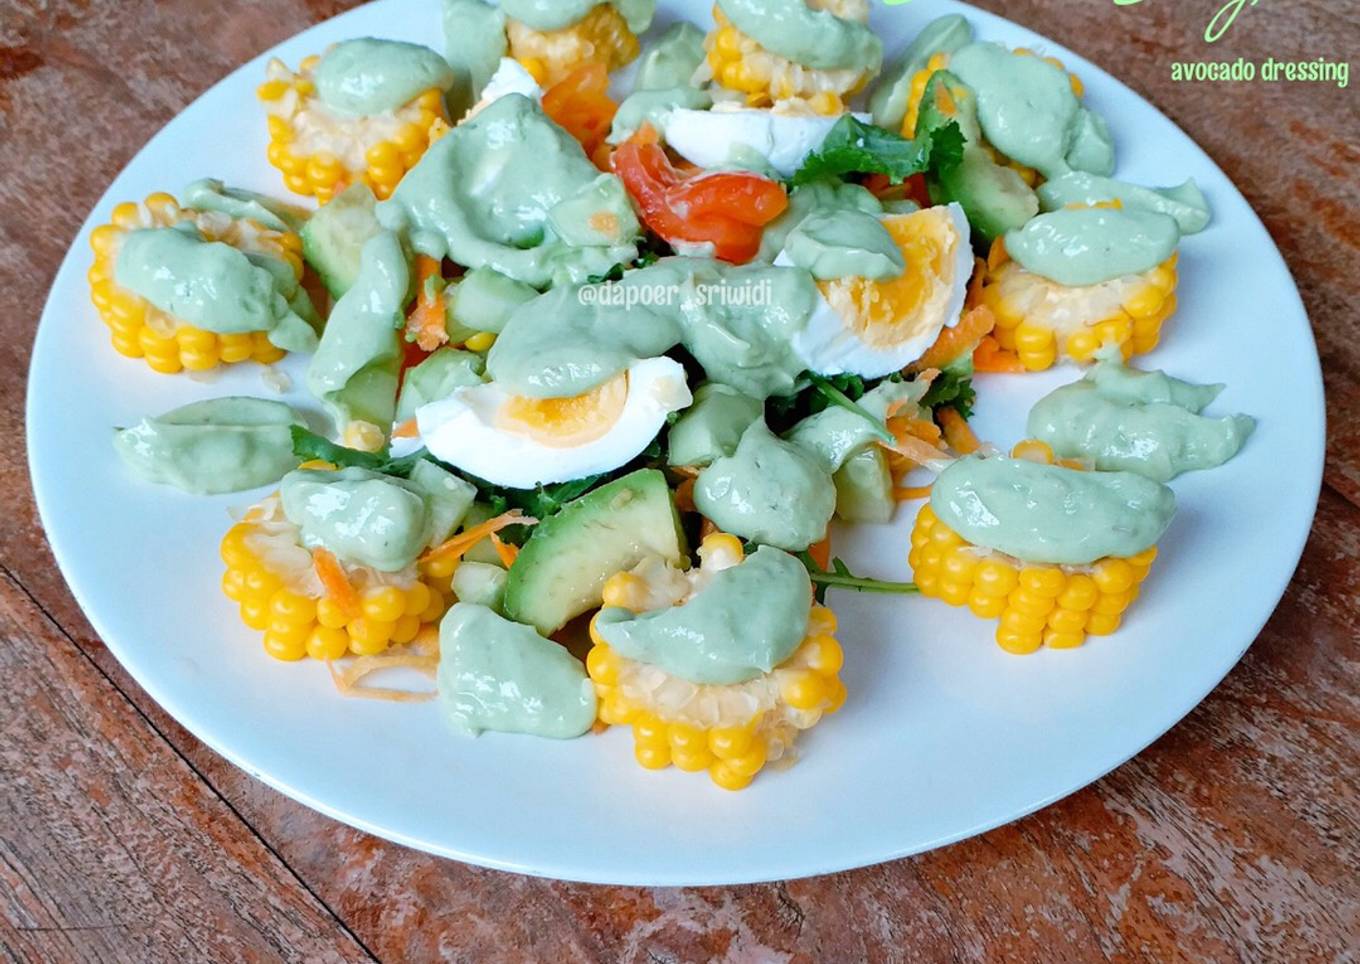 Salad Sayur Avocado Dressing